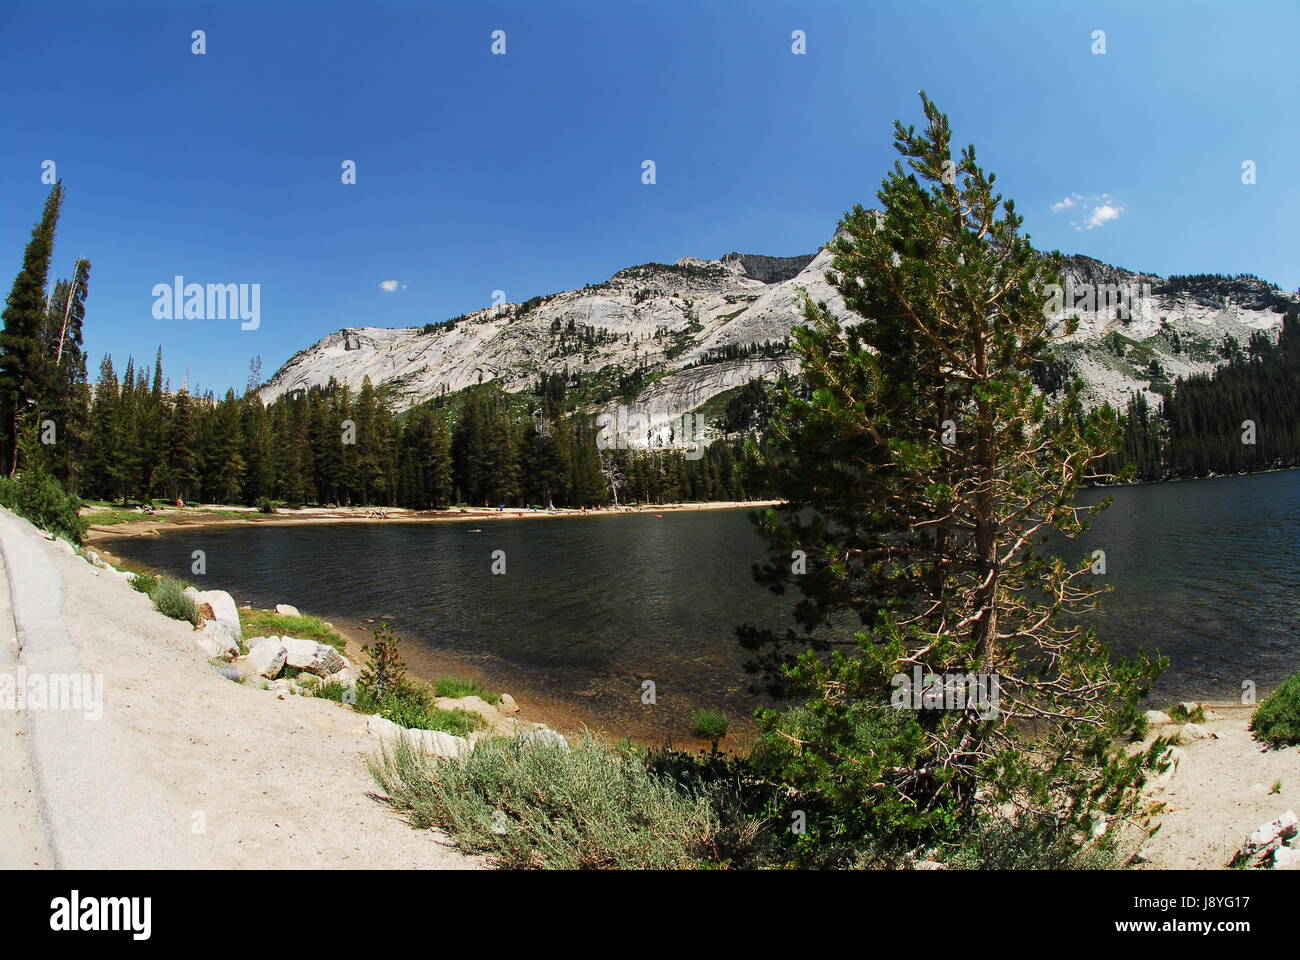 Mountain side road, Yosemite National Park, USA Stock Photo